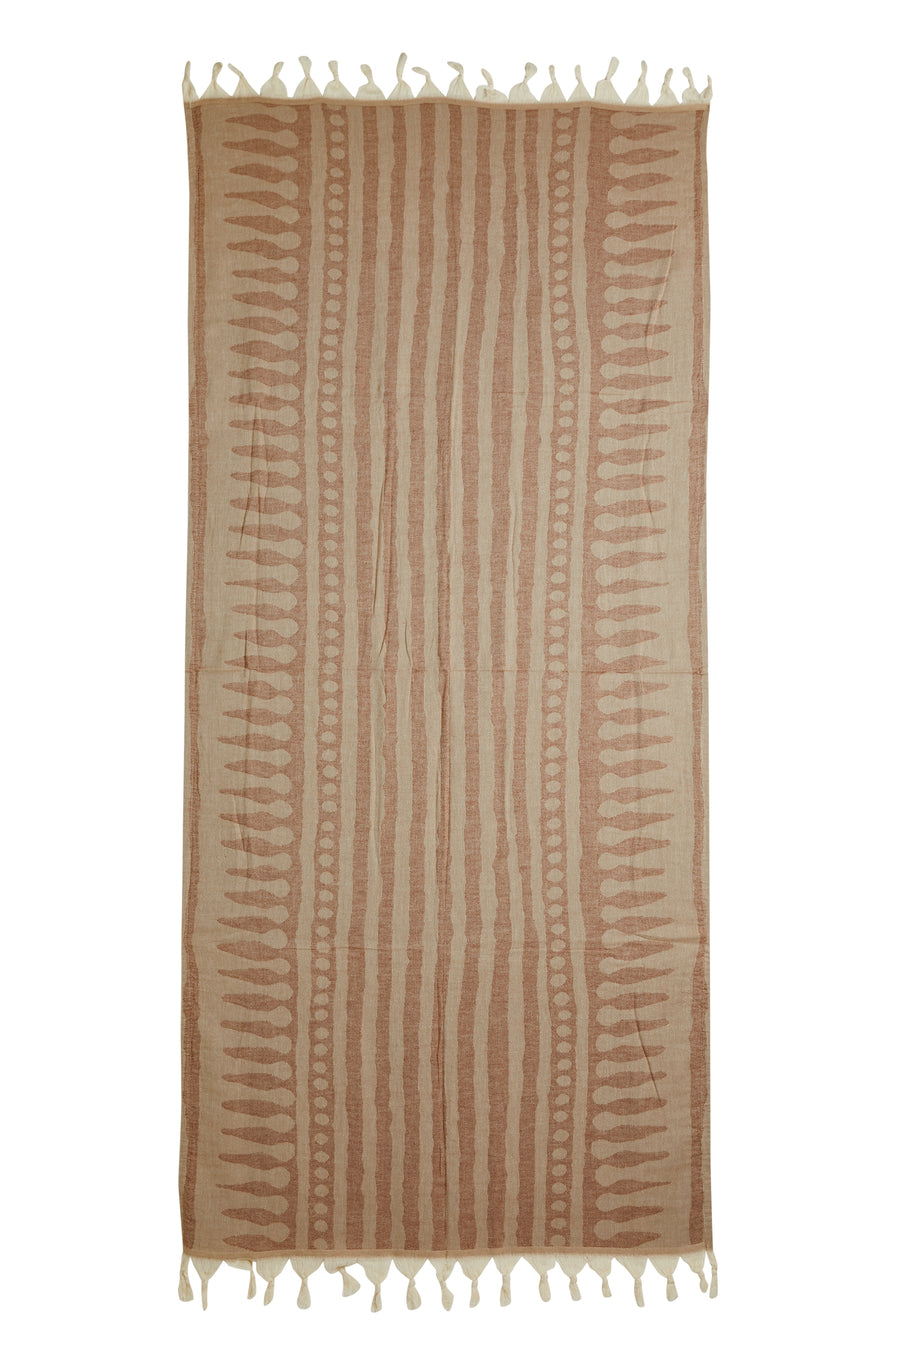 salty shadows - turkish towel two tone - dark brown & light brown